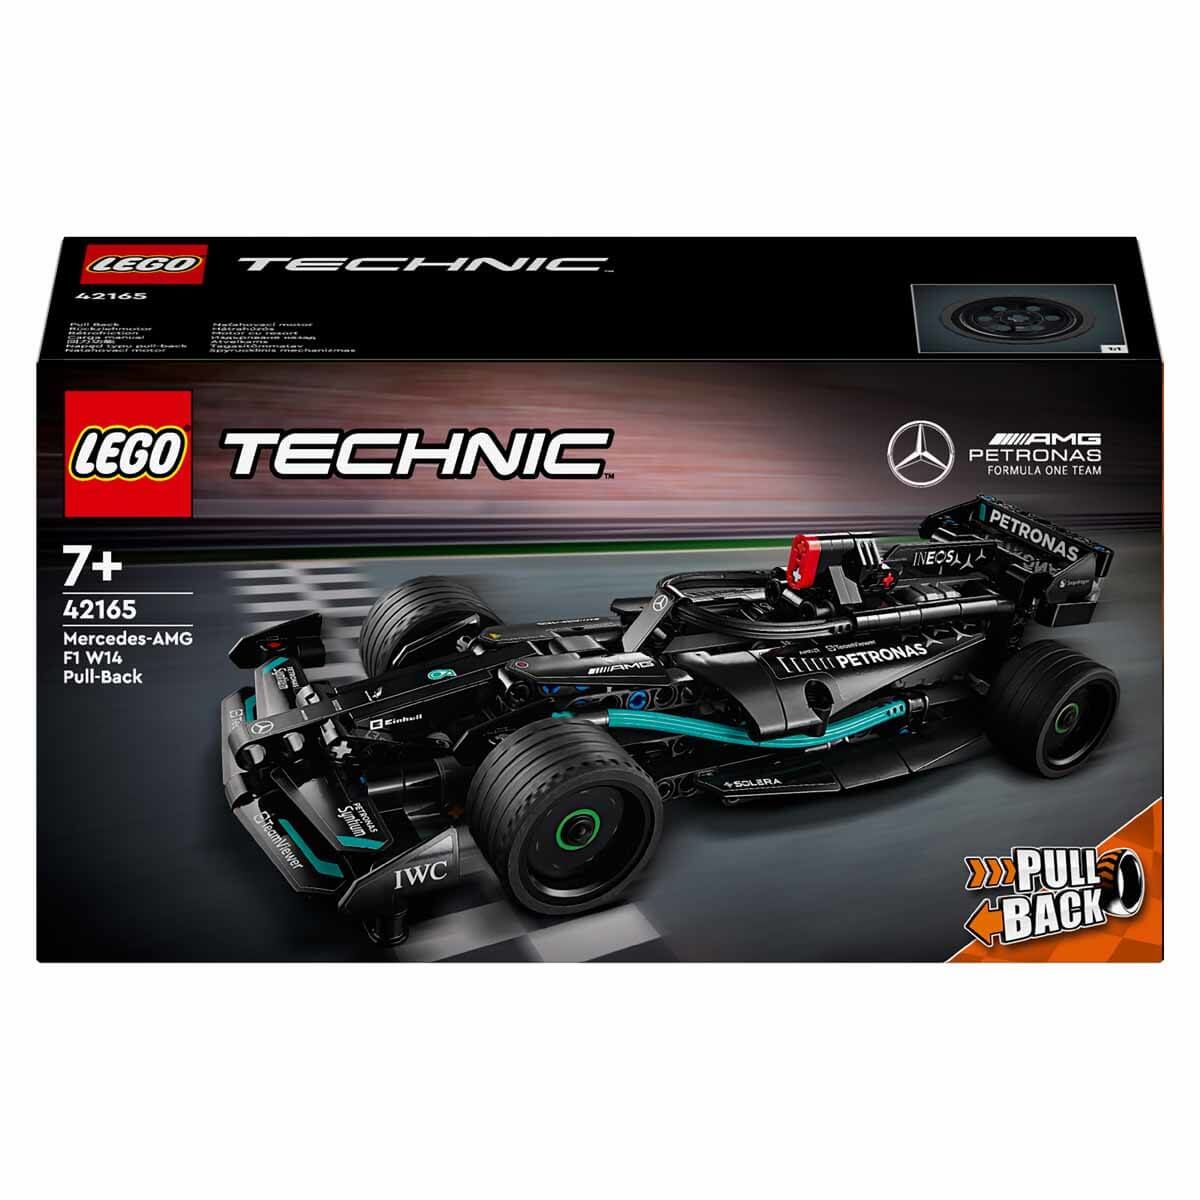 LEGO TECHNİC MERCEDES AMG F1 W14 E PULL BACK 42165